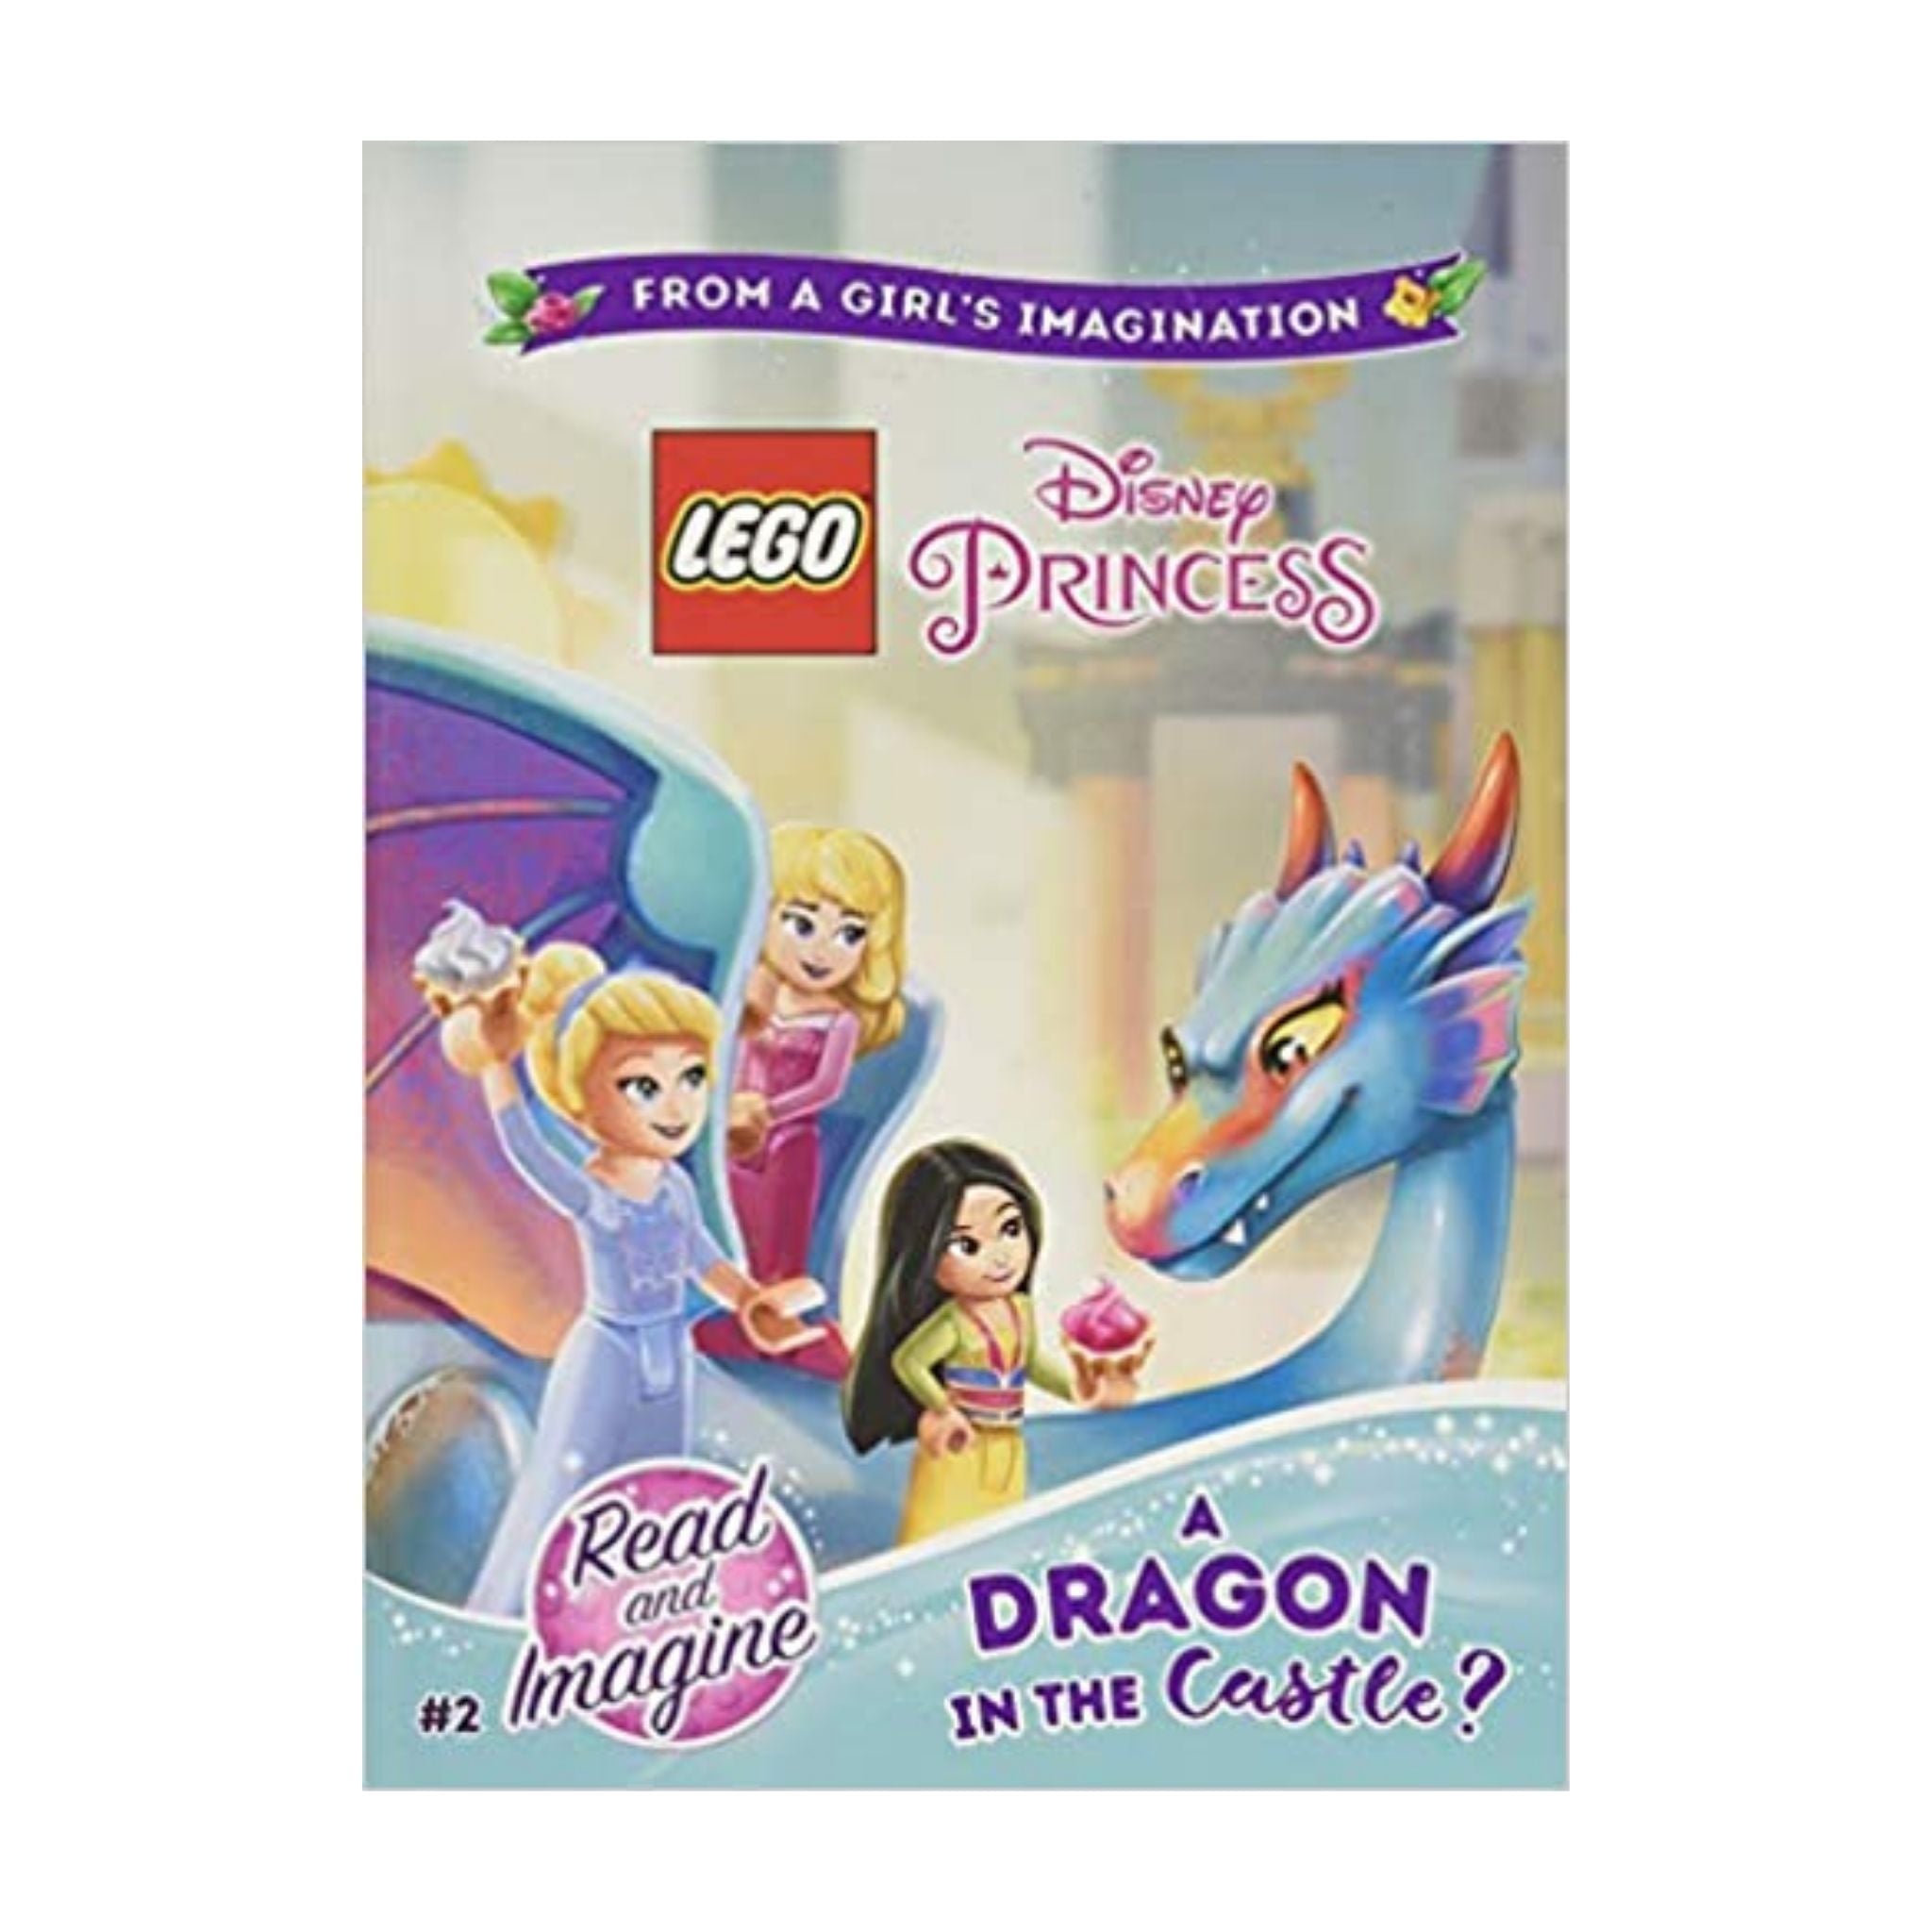 LEGO Disney Princess: A Dragon in the Castle?: Chapter Book 2 (Lego Disney Princess: Read and Imagine)